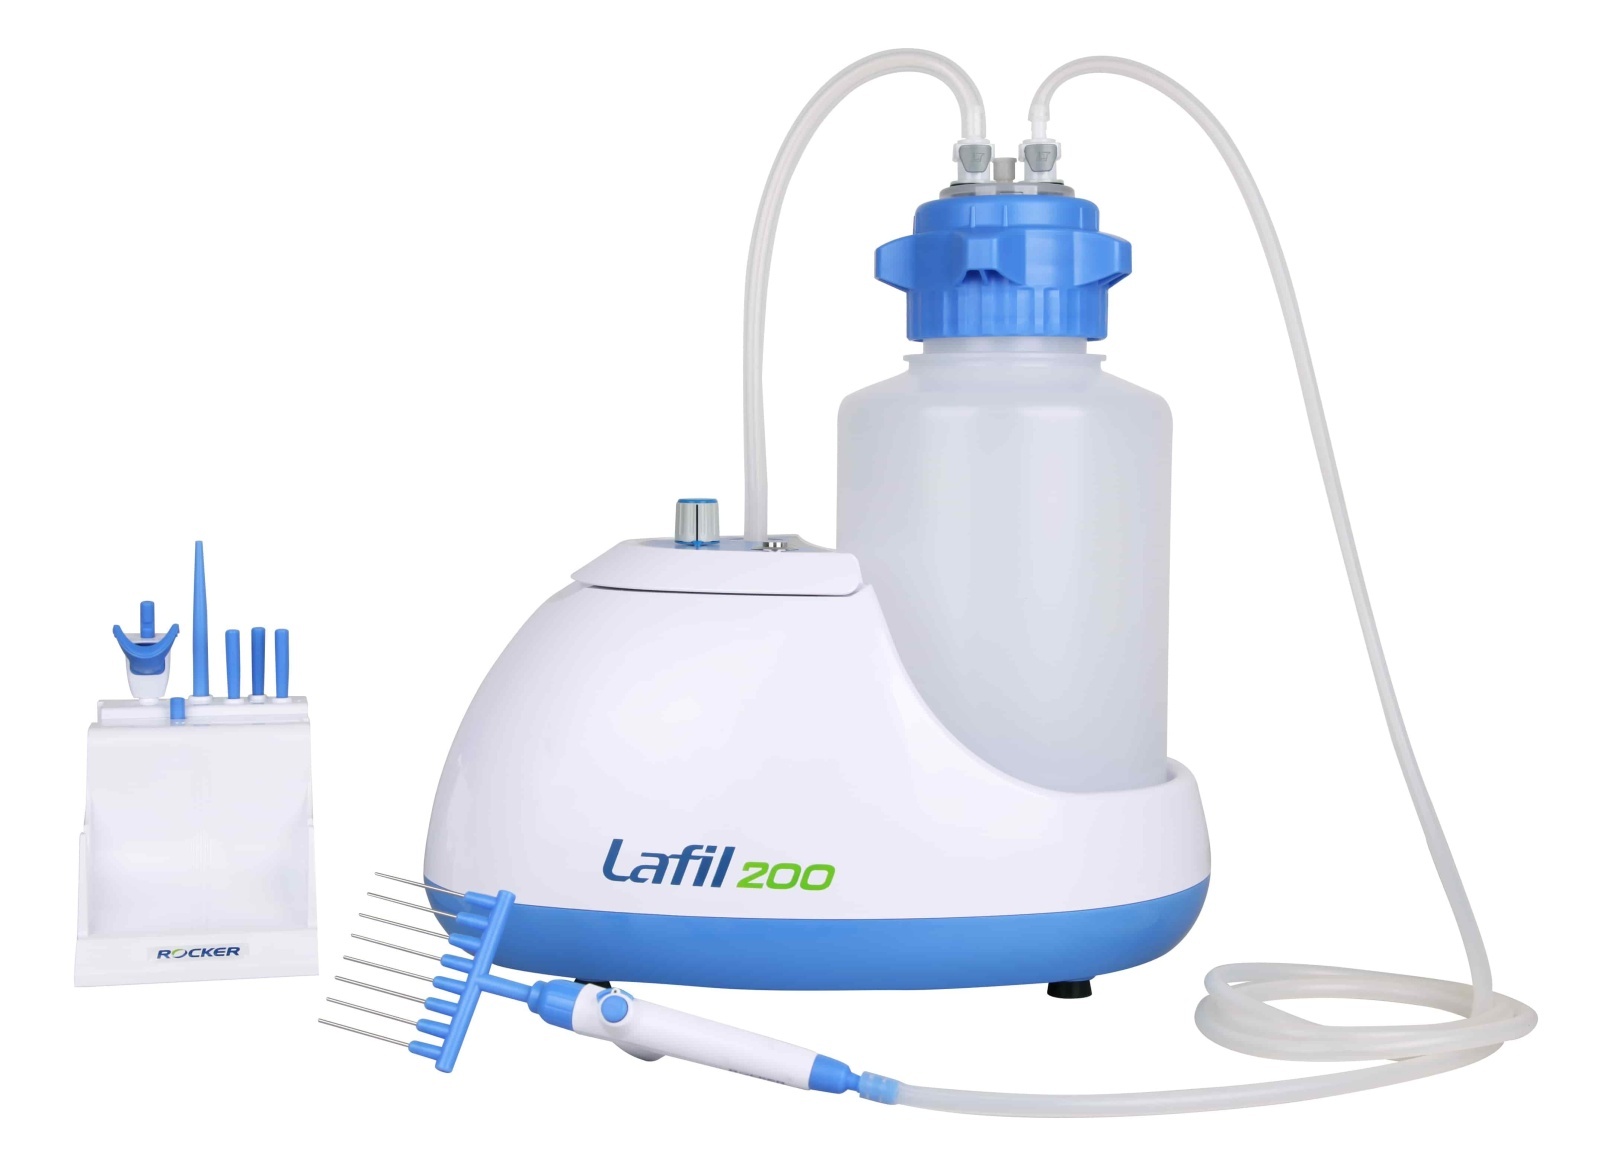 Lafil 200 - BioDolphin废液抽吸系统的图片